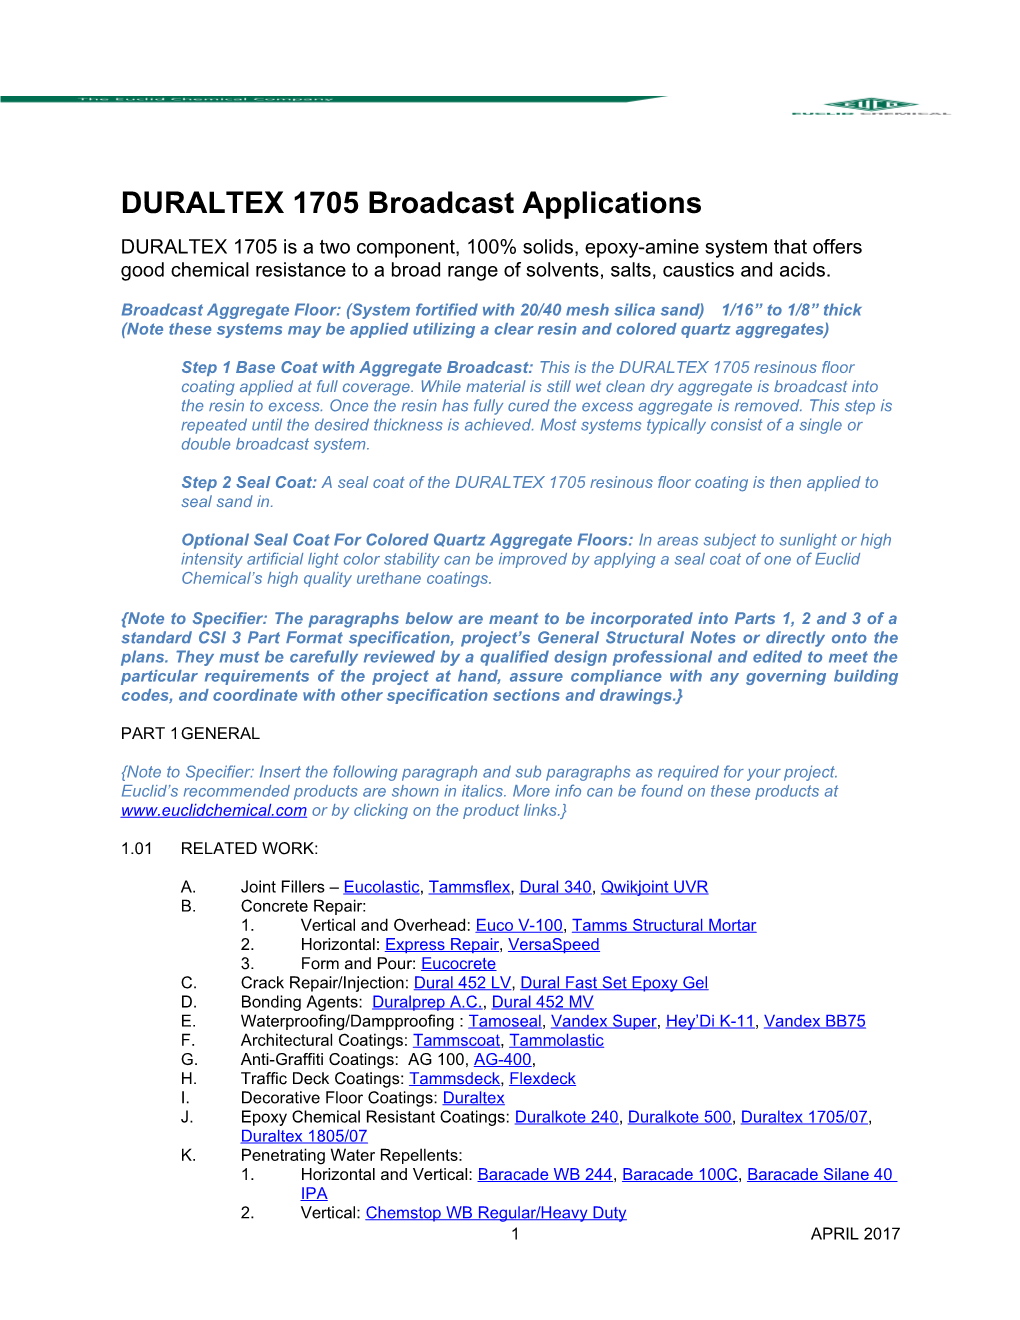 DURALTEX 1705Broadcast Applications